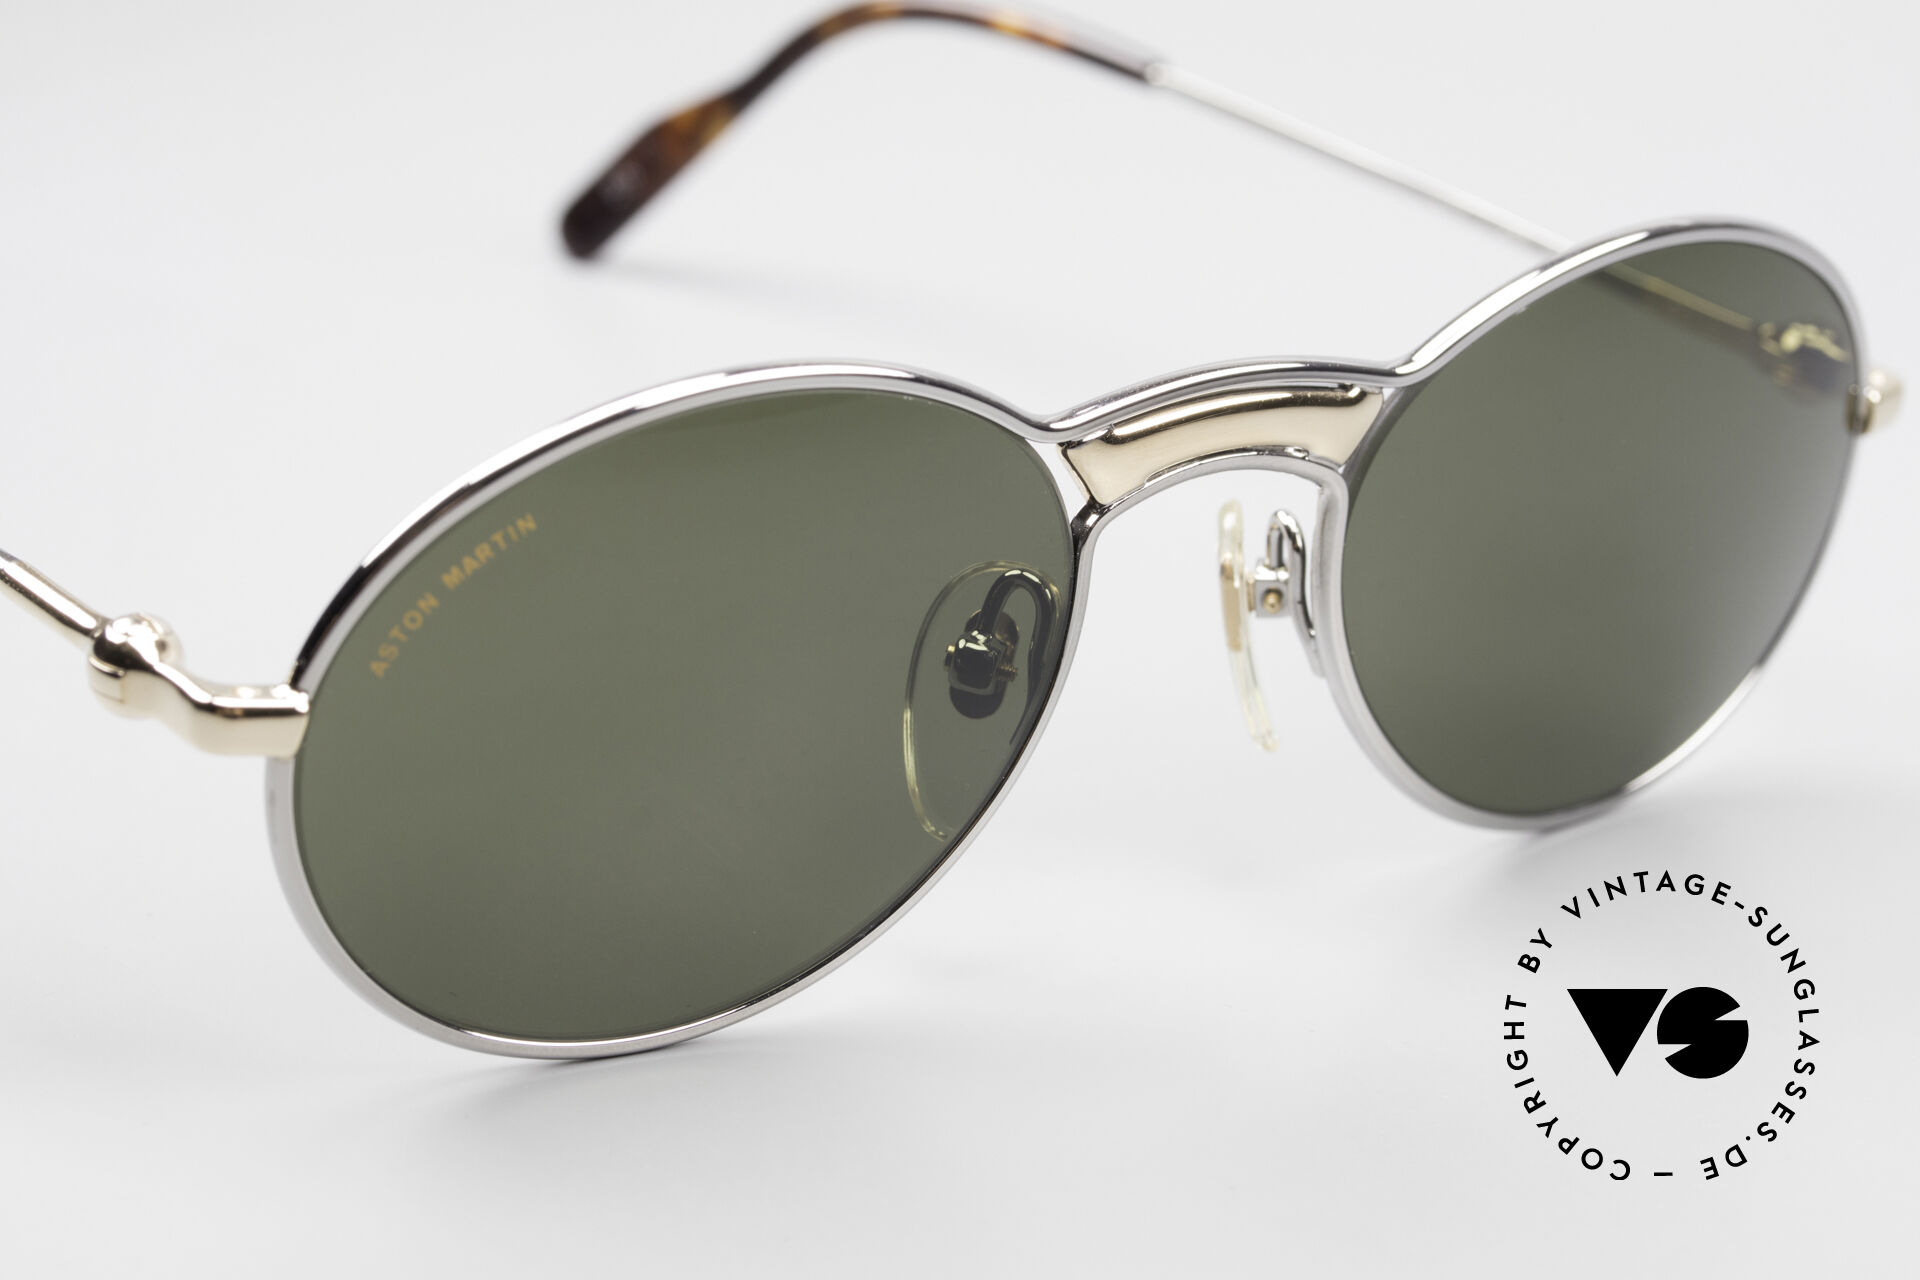 Sunglasses Aston Martin AM01 Oval Glasses James Bond Style